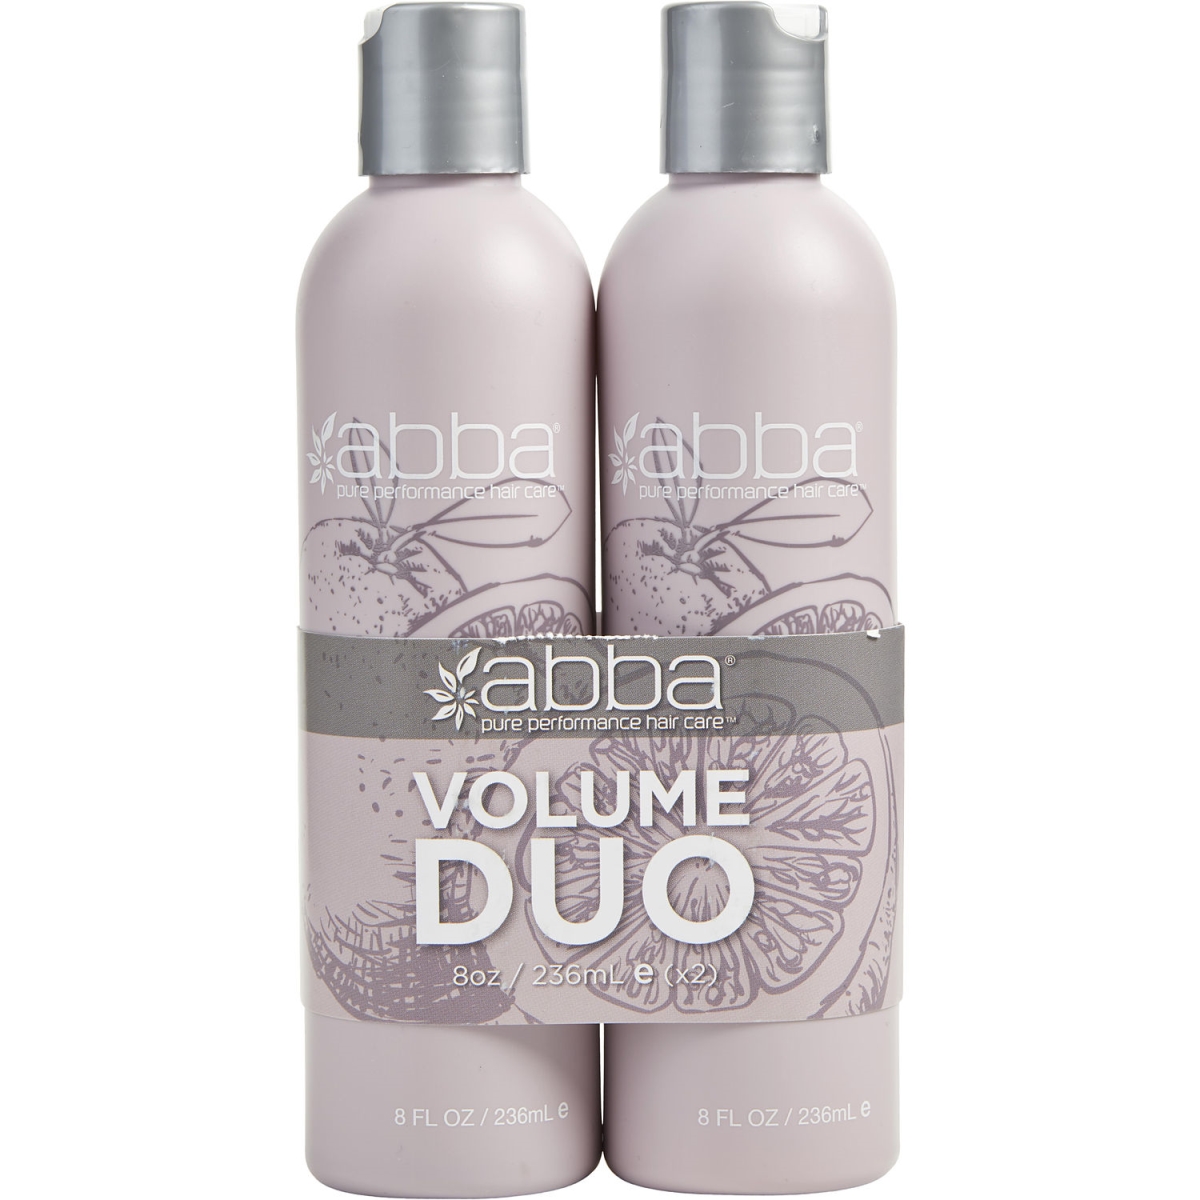 343236 8 Oz Unisex Duo Volume Hair Shampoo & Conditioner